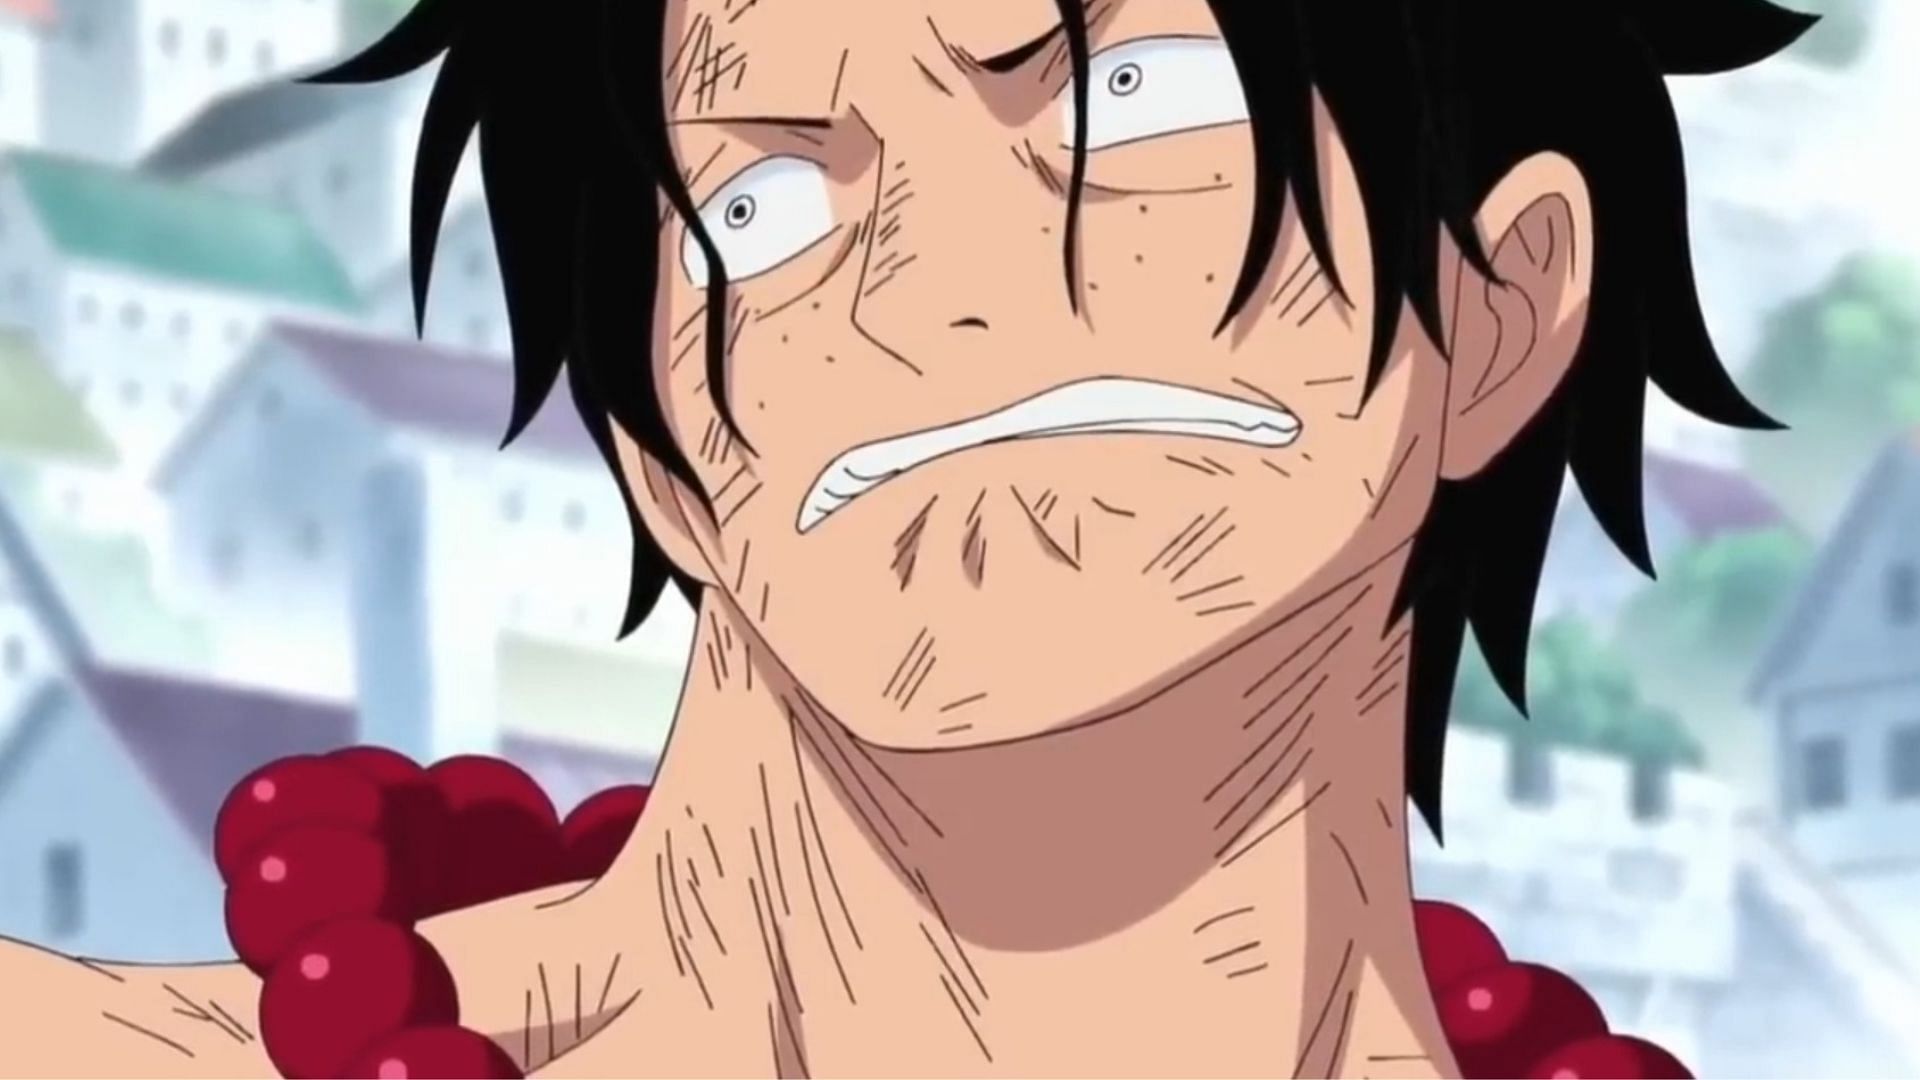 Ace One Piece Face - Roblox